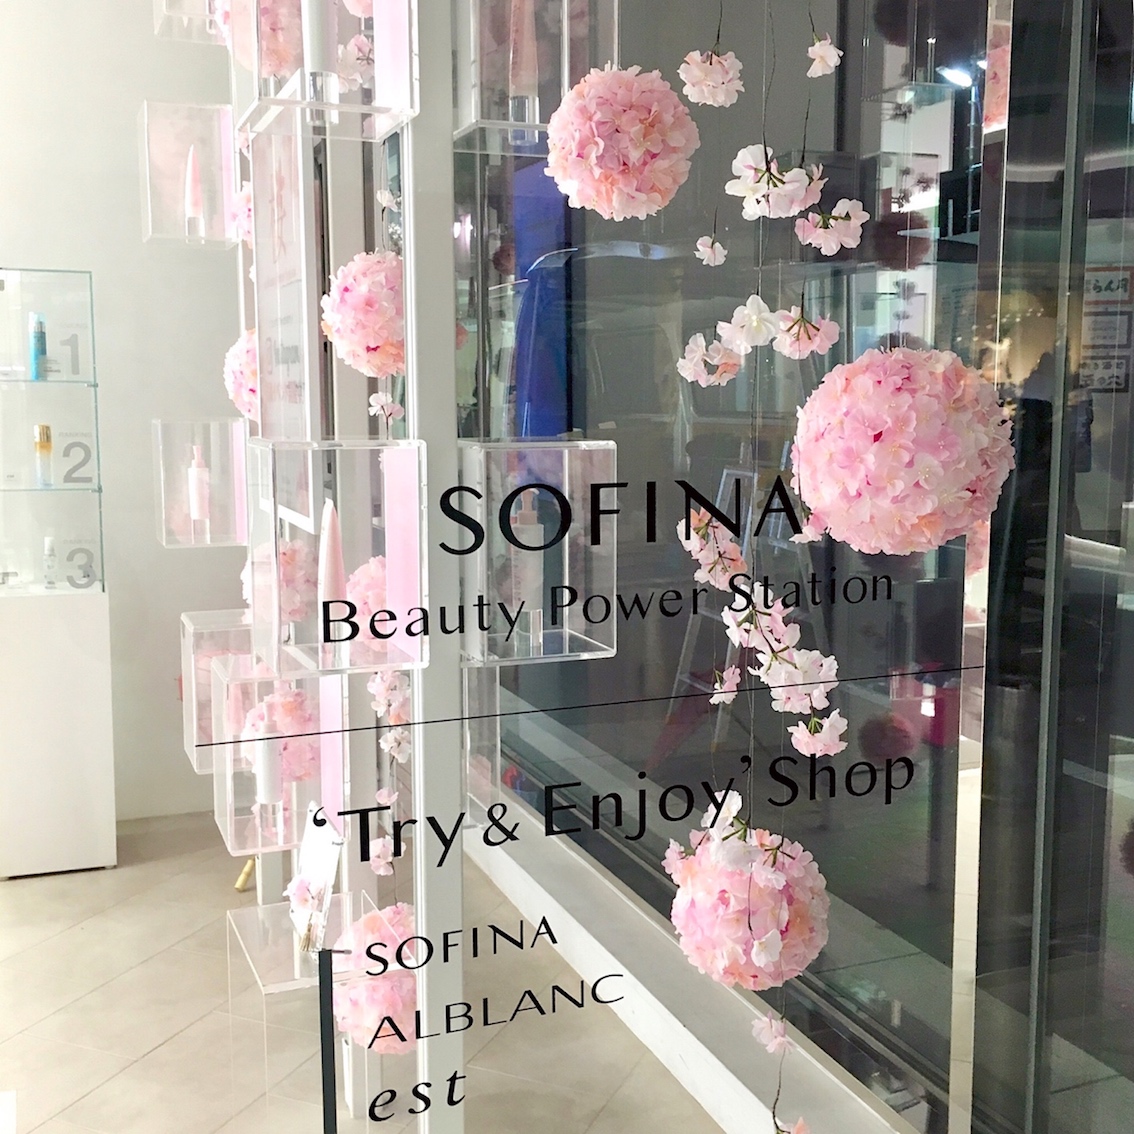 SOFINA Beauty Power Station 銀座店さま　ディスプレイ飾花